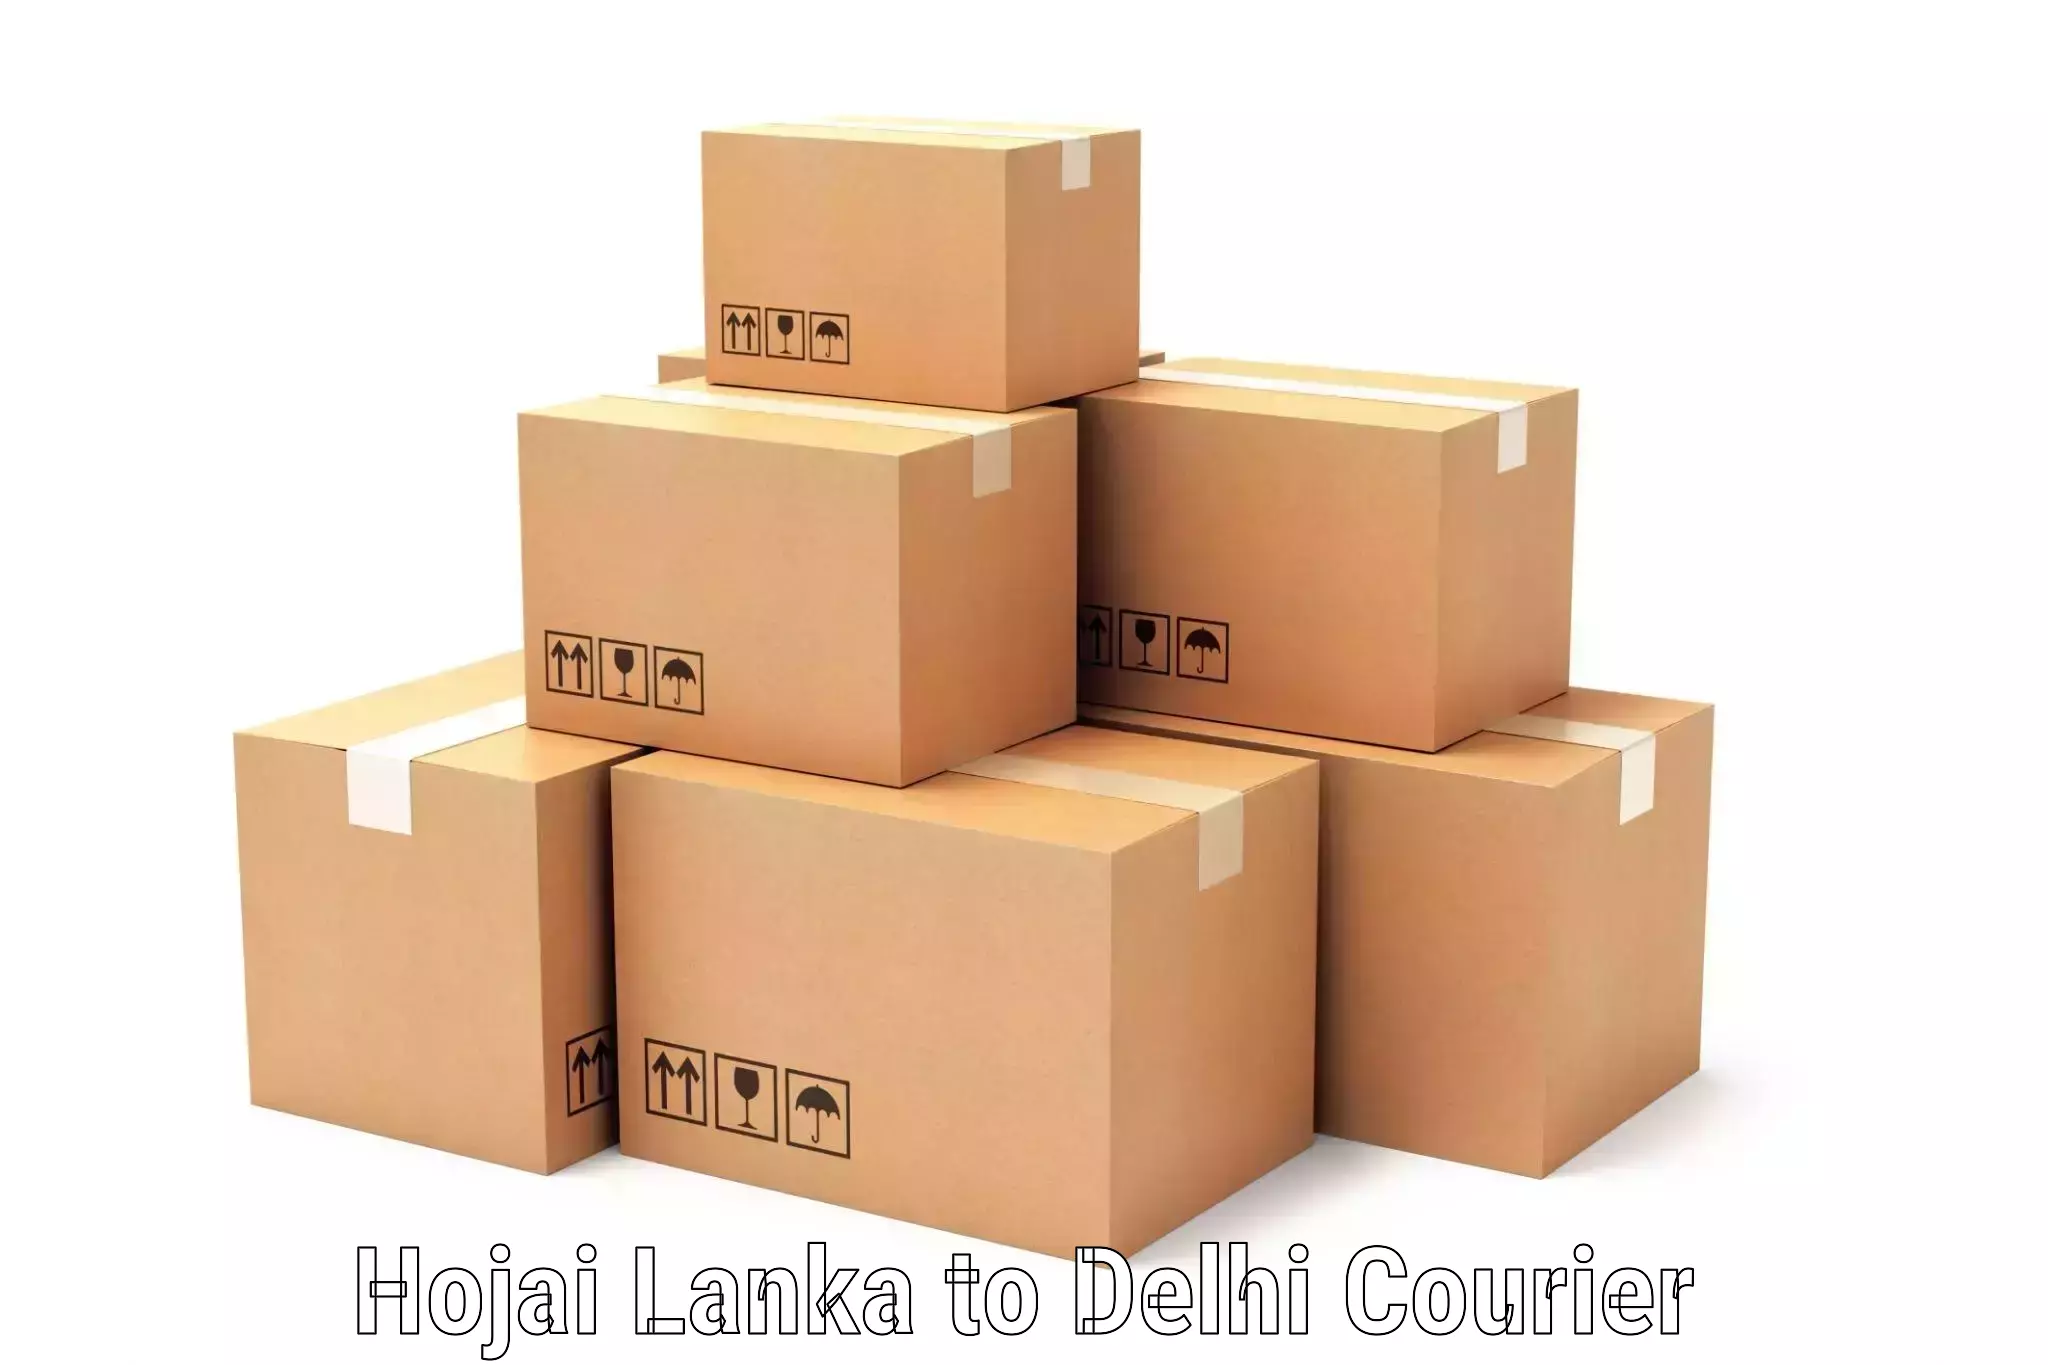 Overnight delivery Hojai Lanka to Delhi